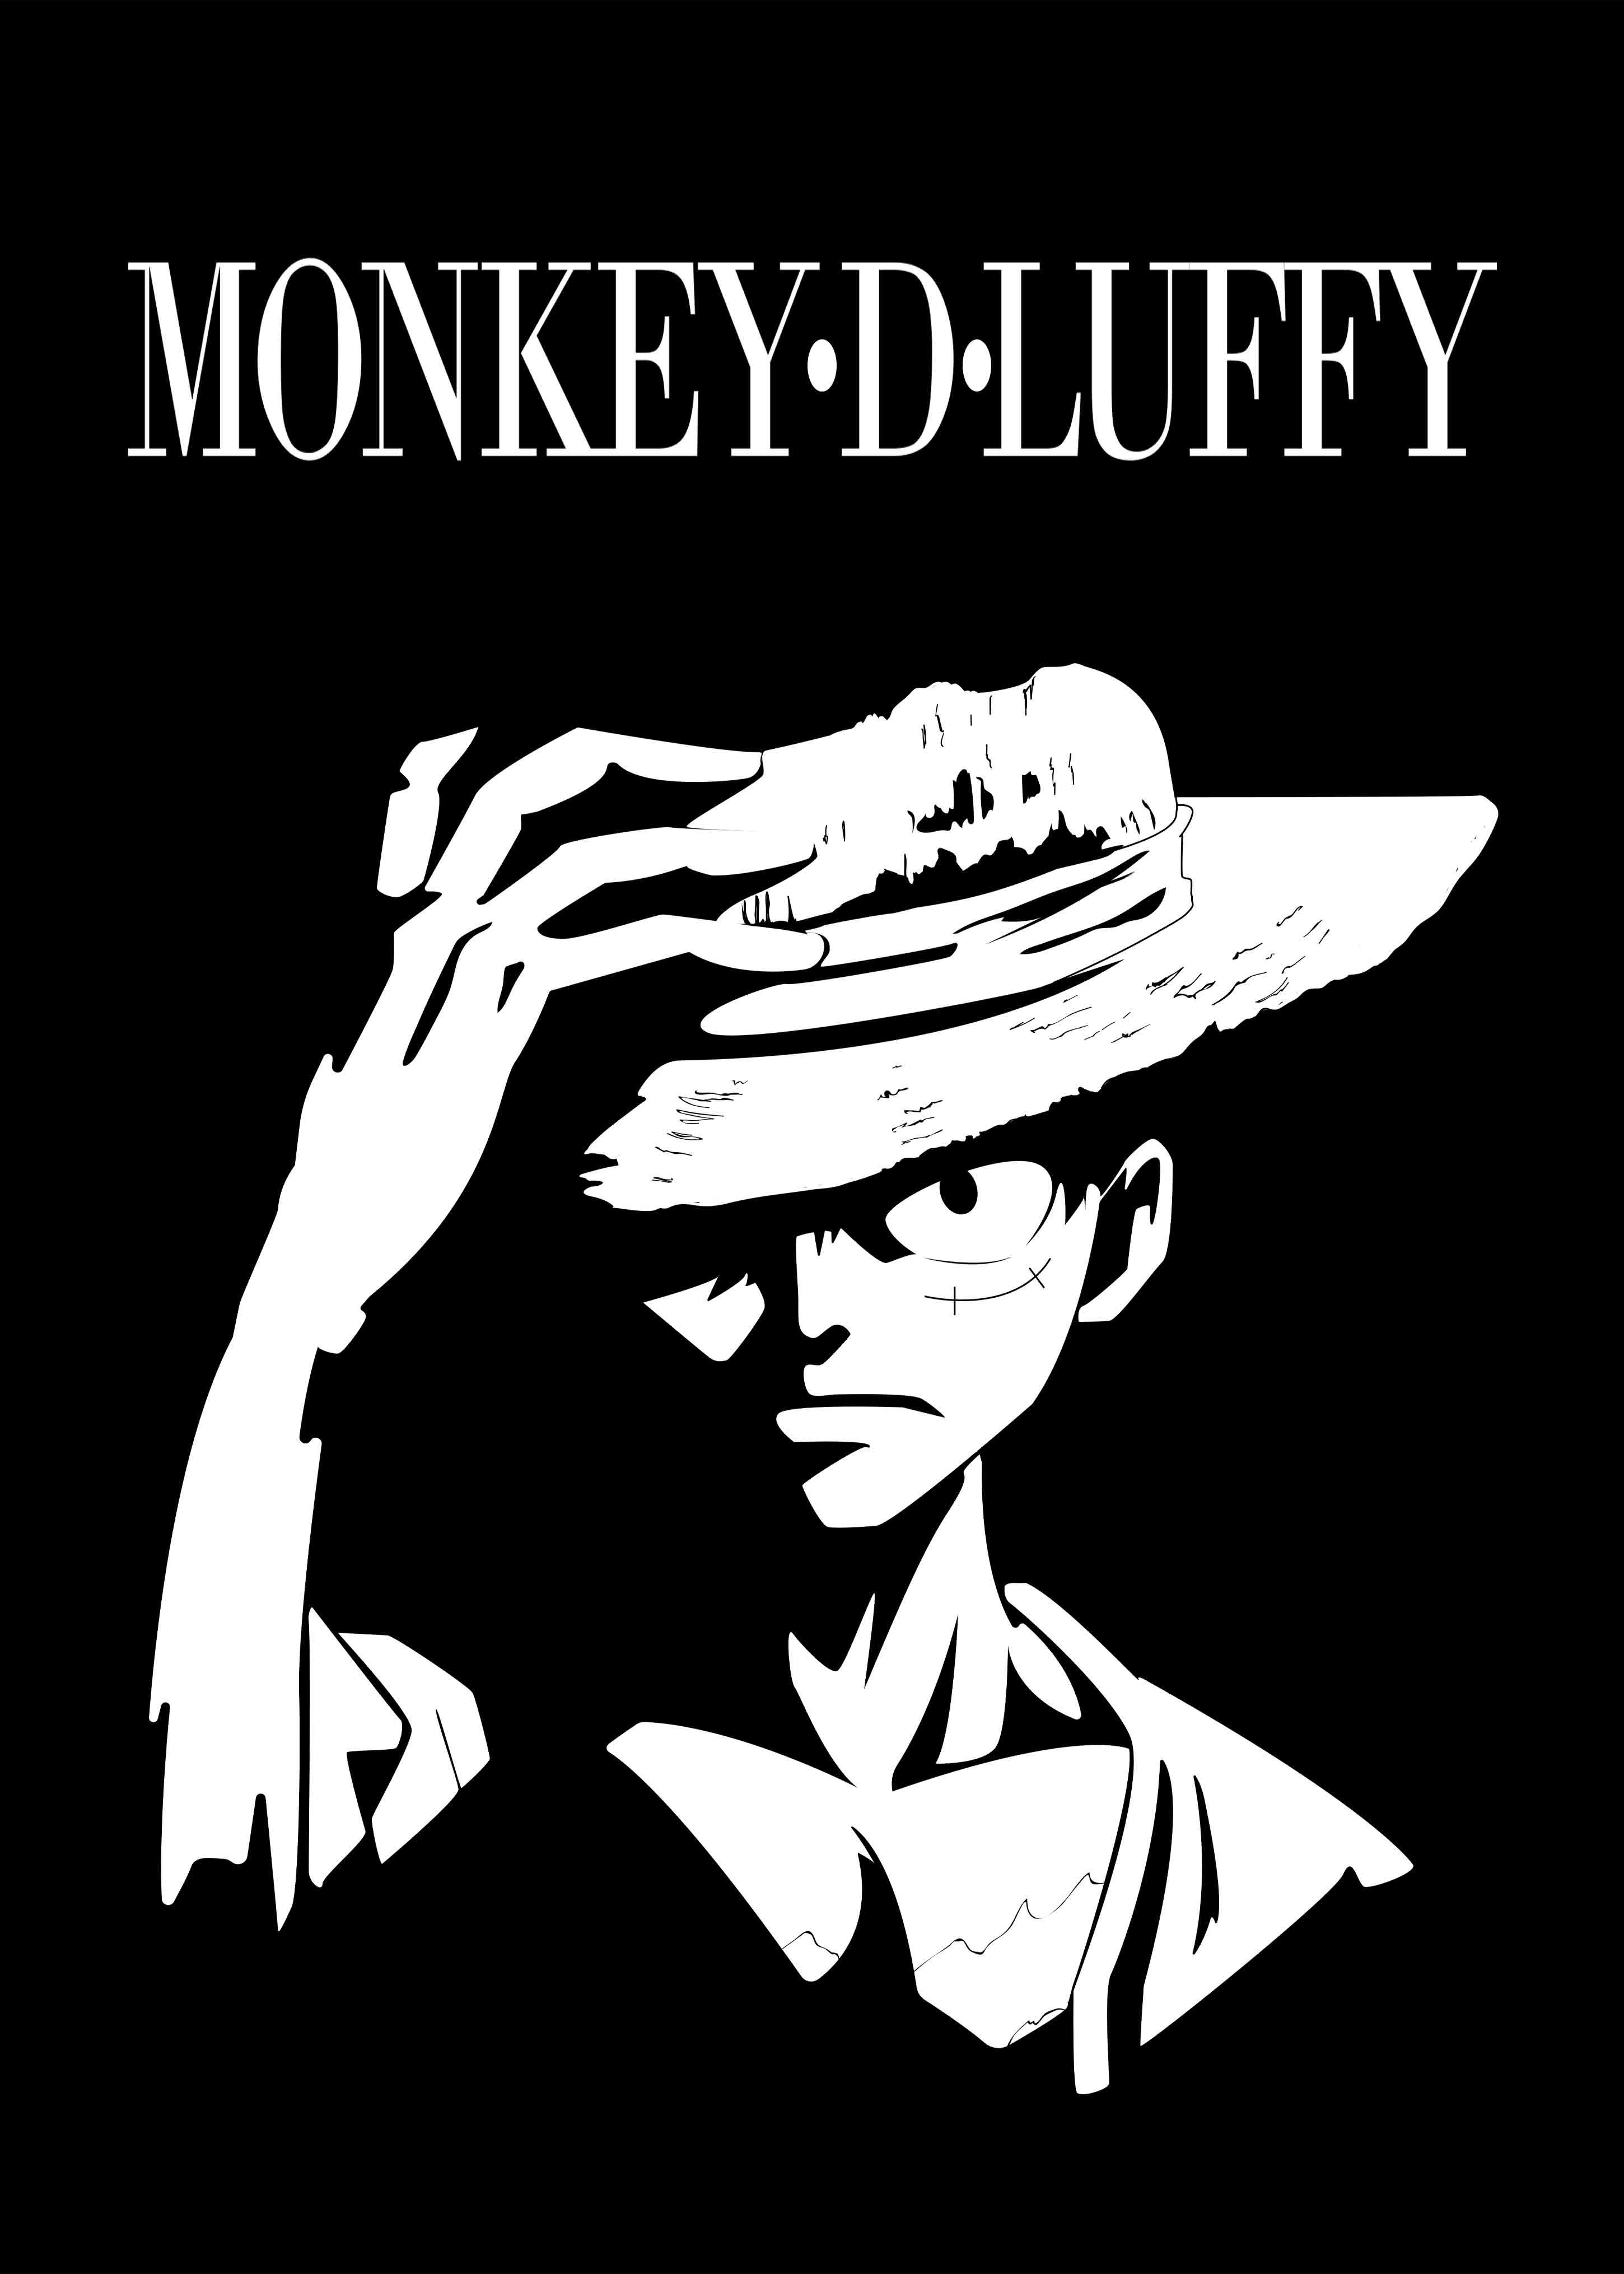 Monkey D. Luffy One Piece. One piece comic, One piece drawing, One piece movies